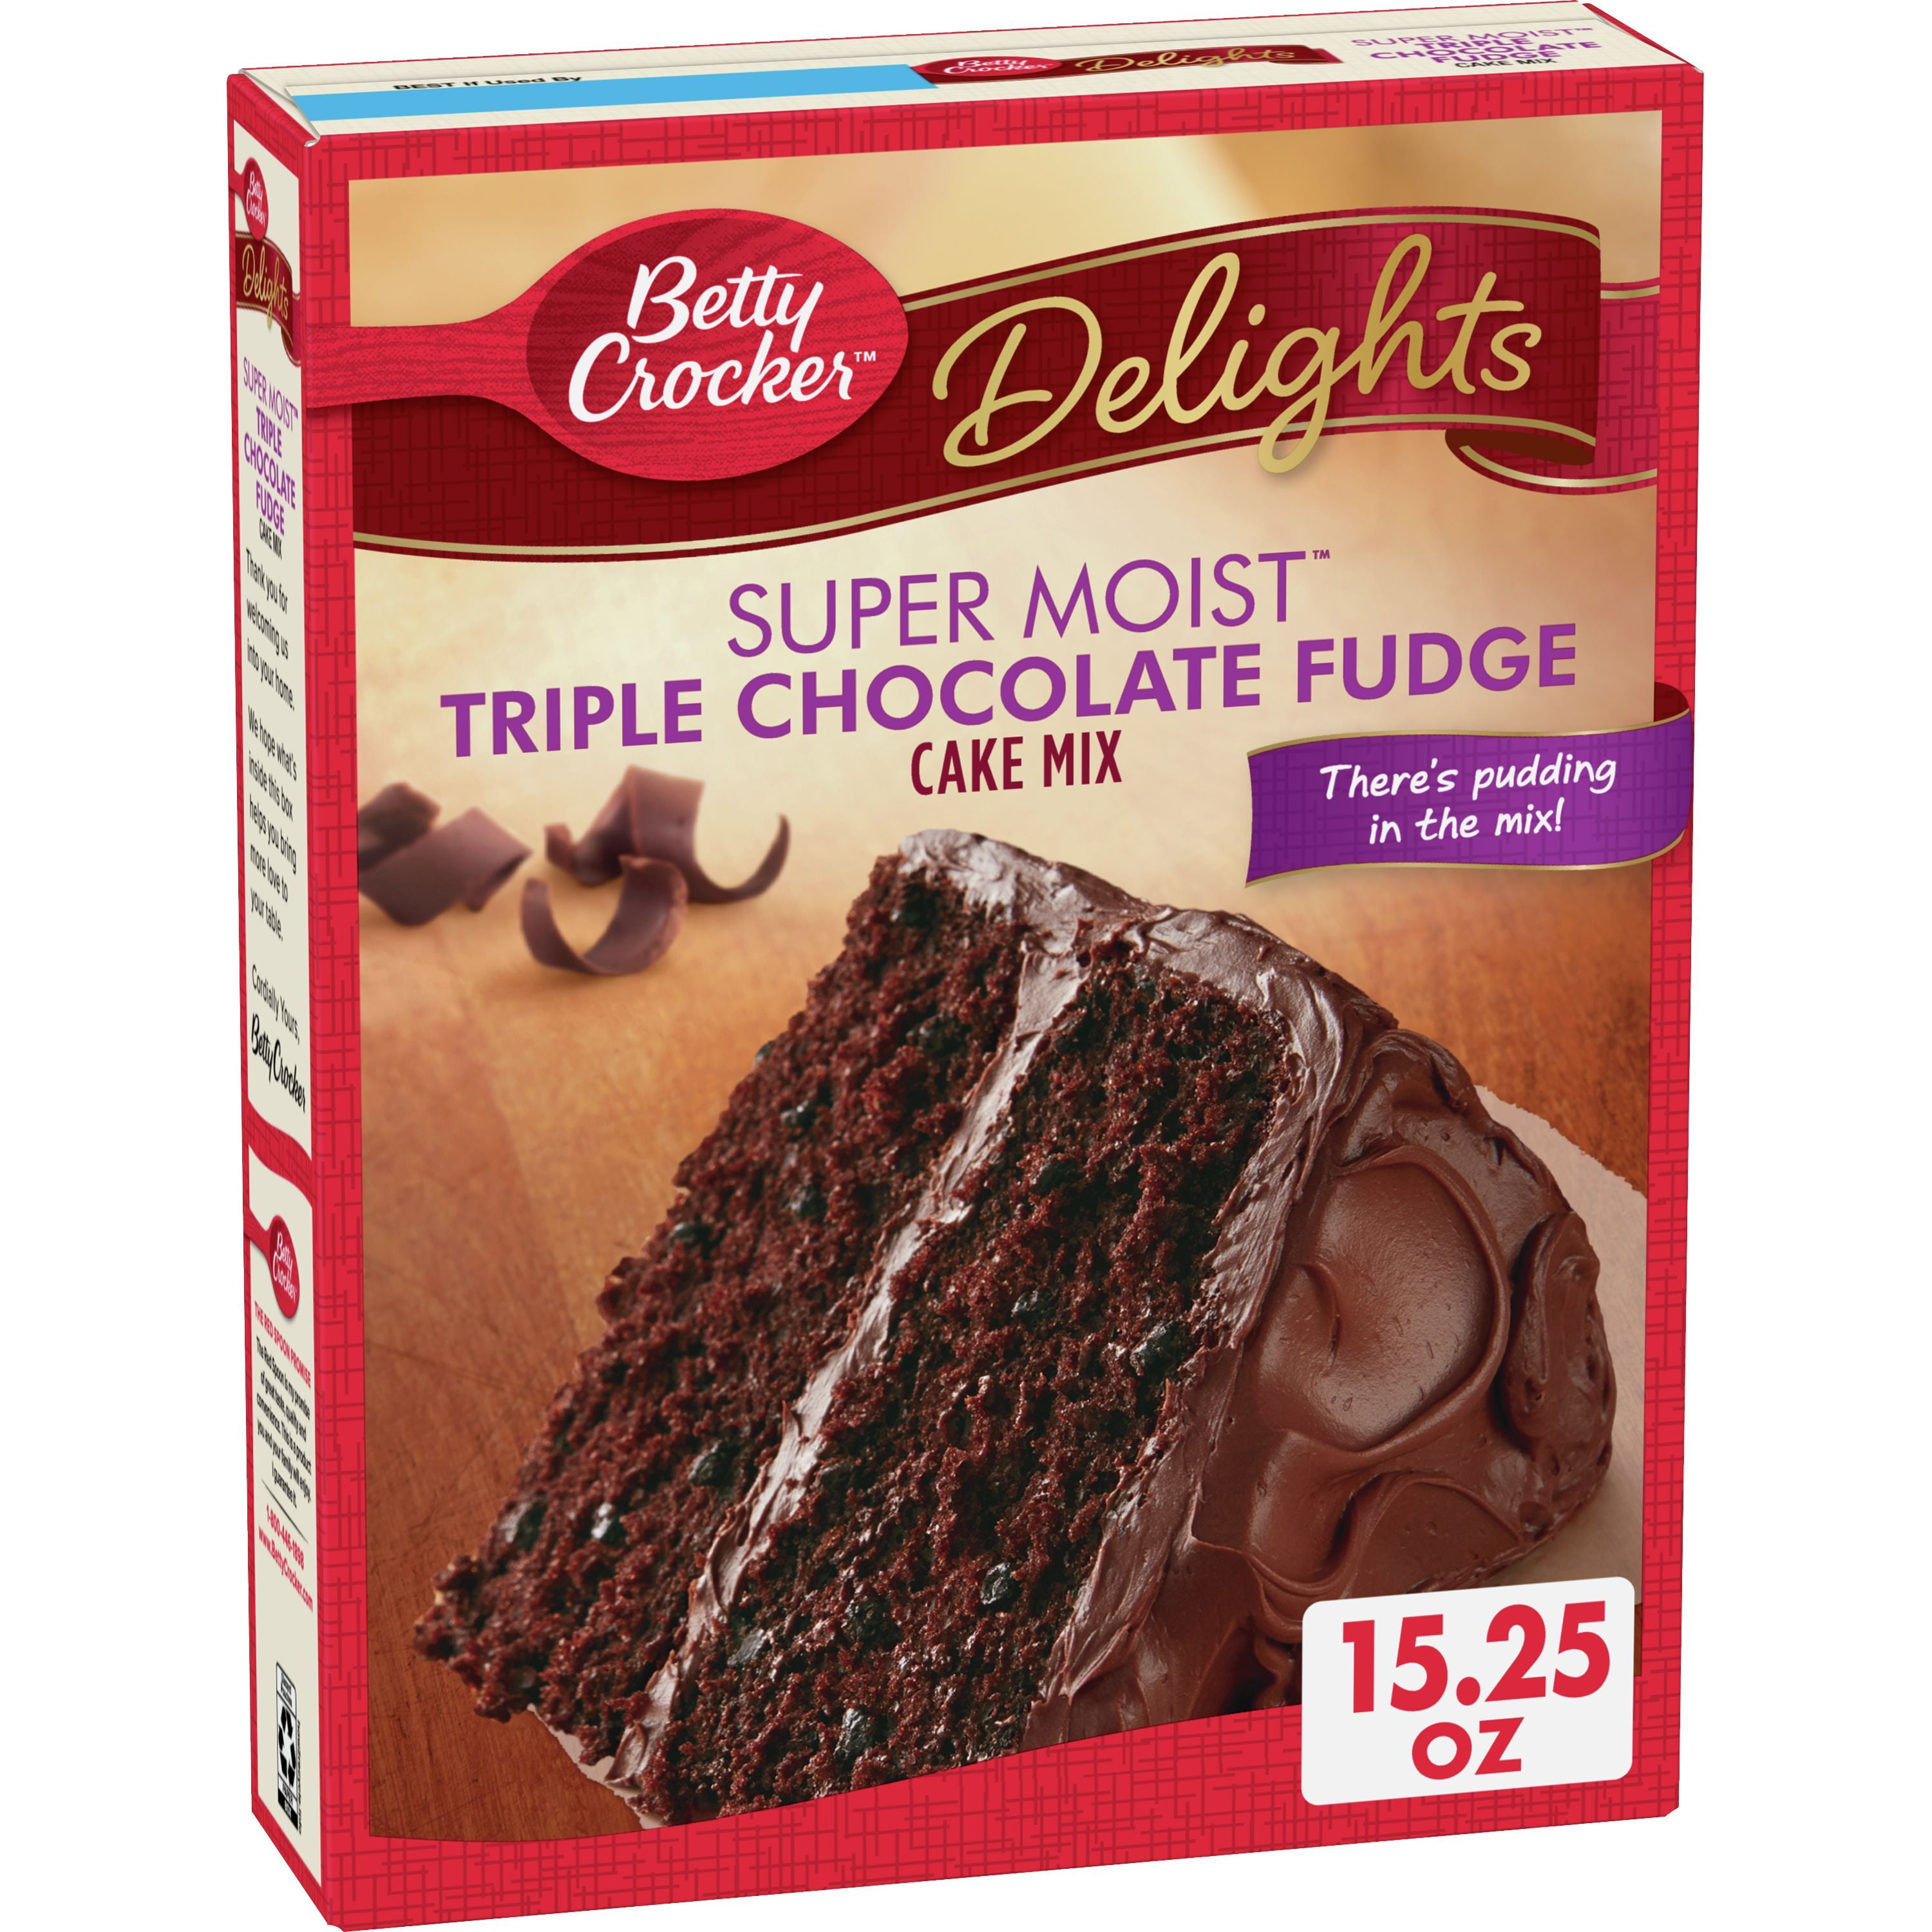 Sædvanlig Albany servitrice Betty Crocker Super Moist Triple Chocolate Fudge Cake Mix, 15.25 oz -  Walmart.com